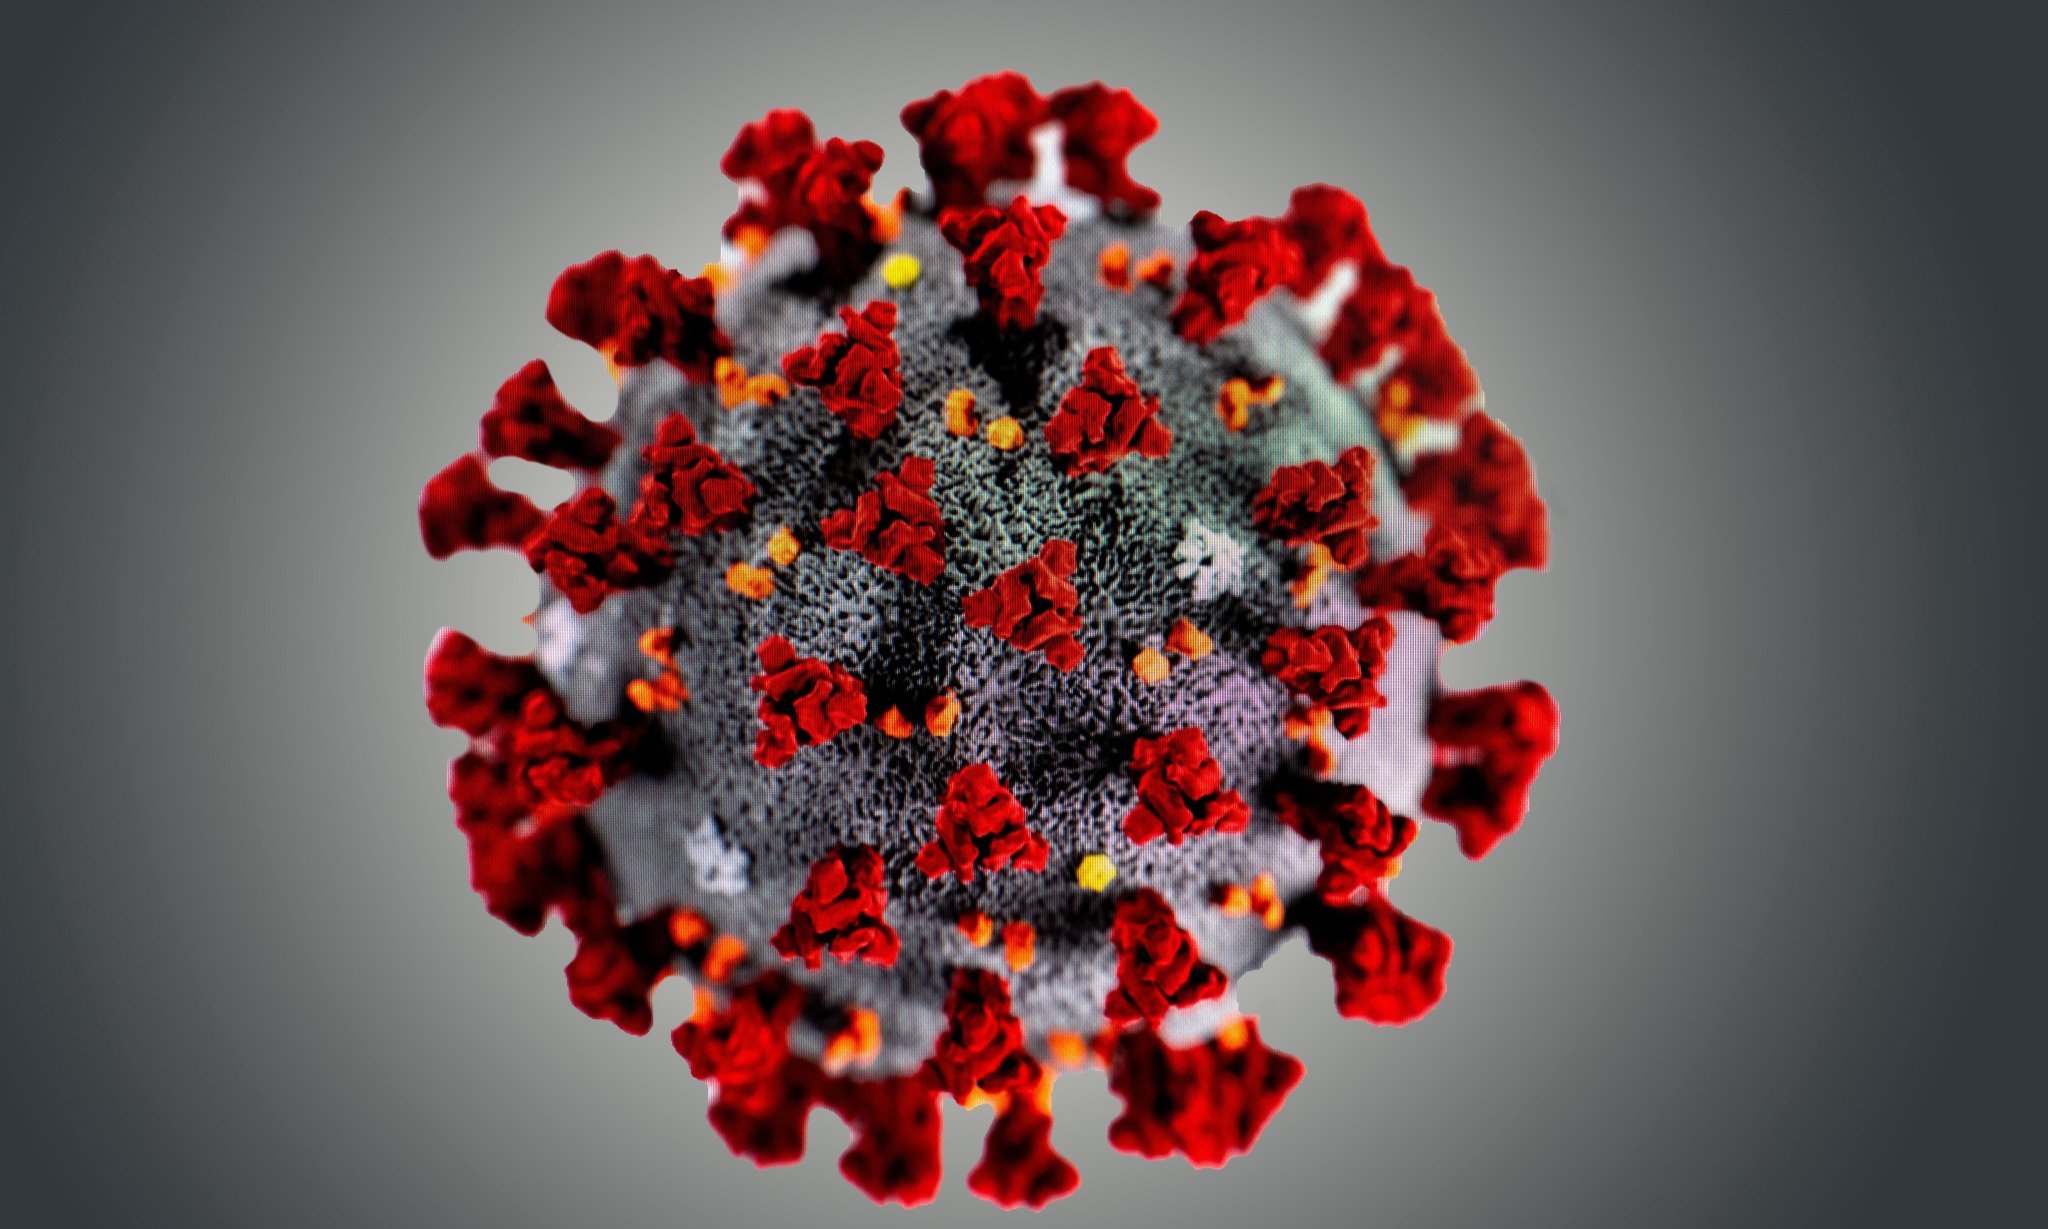 Coronavirus: Latest News cover image